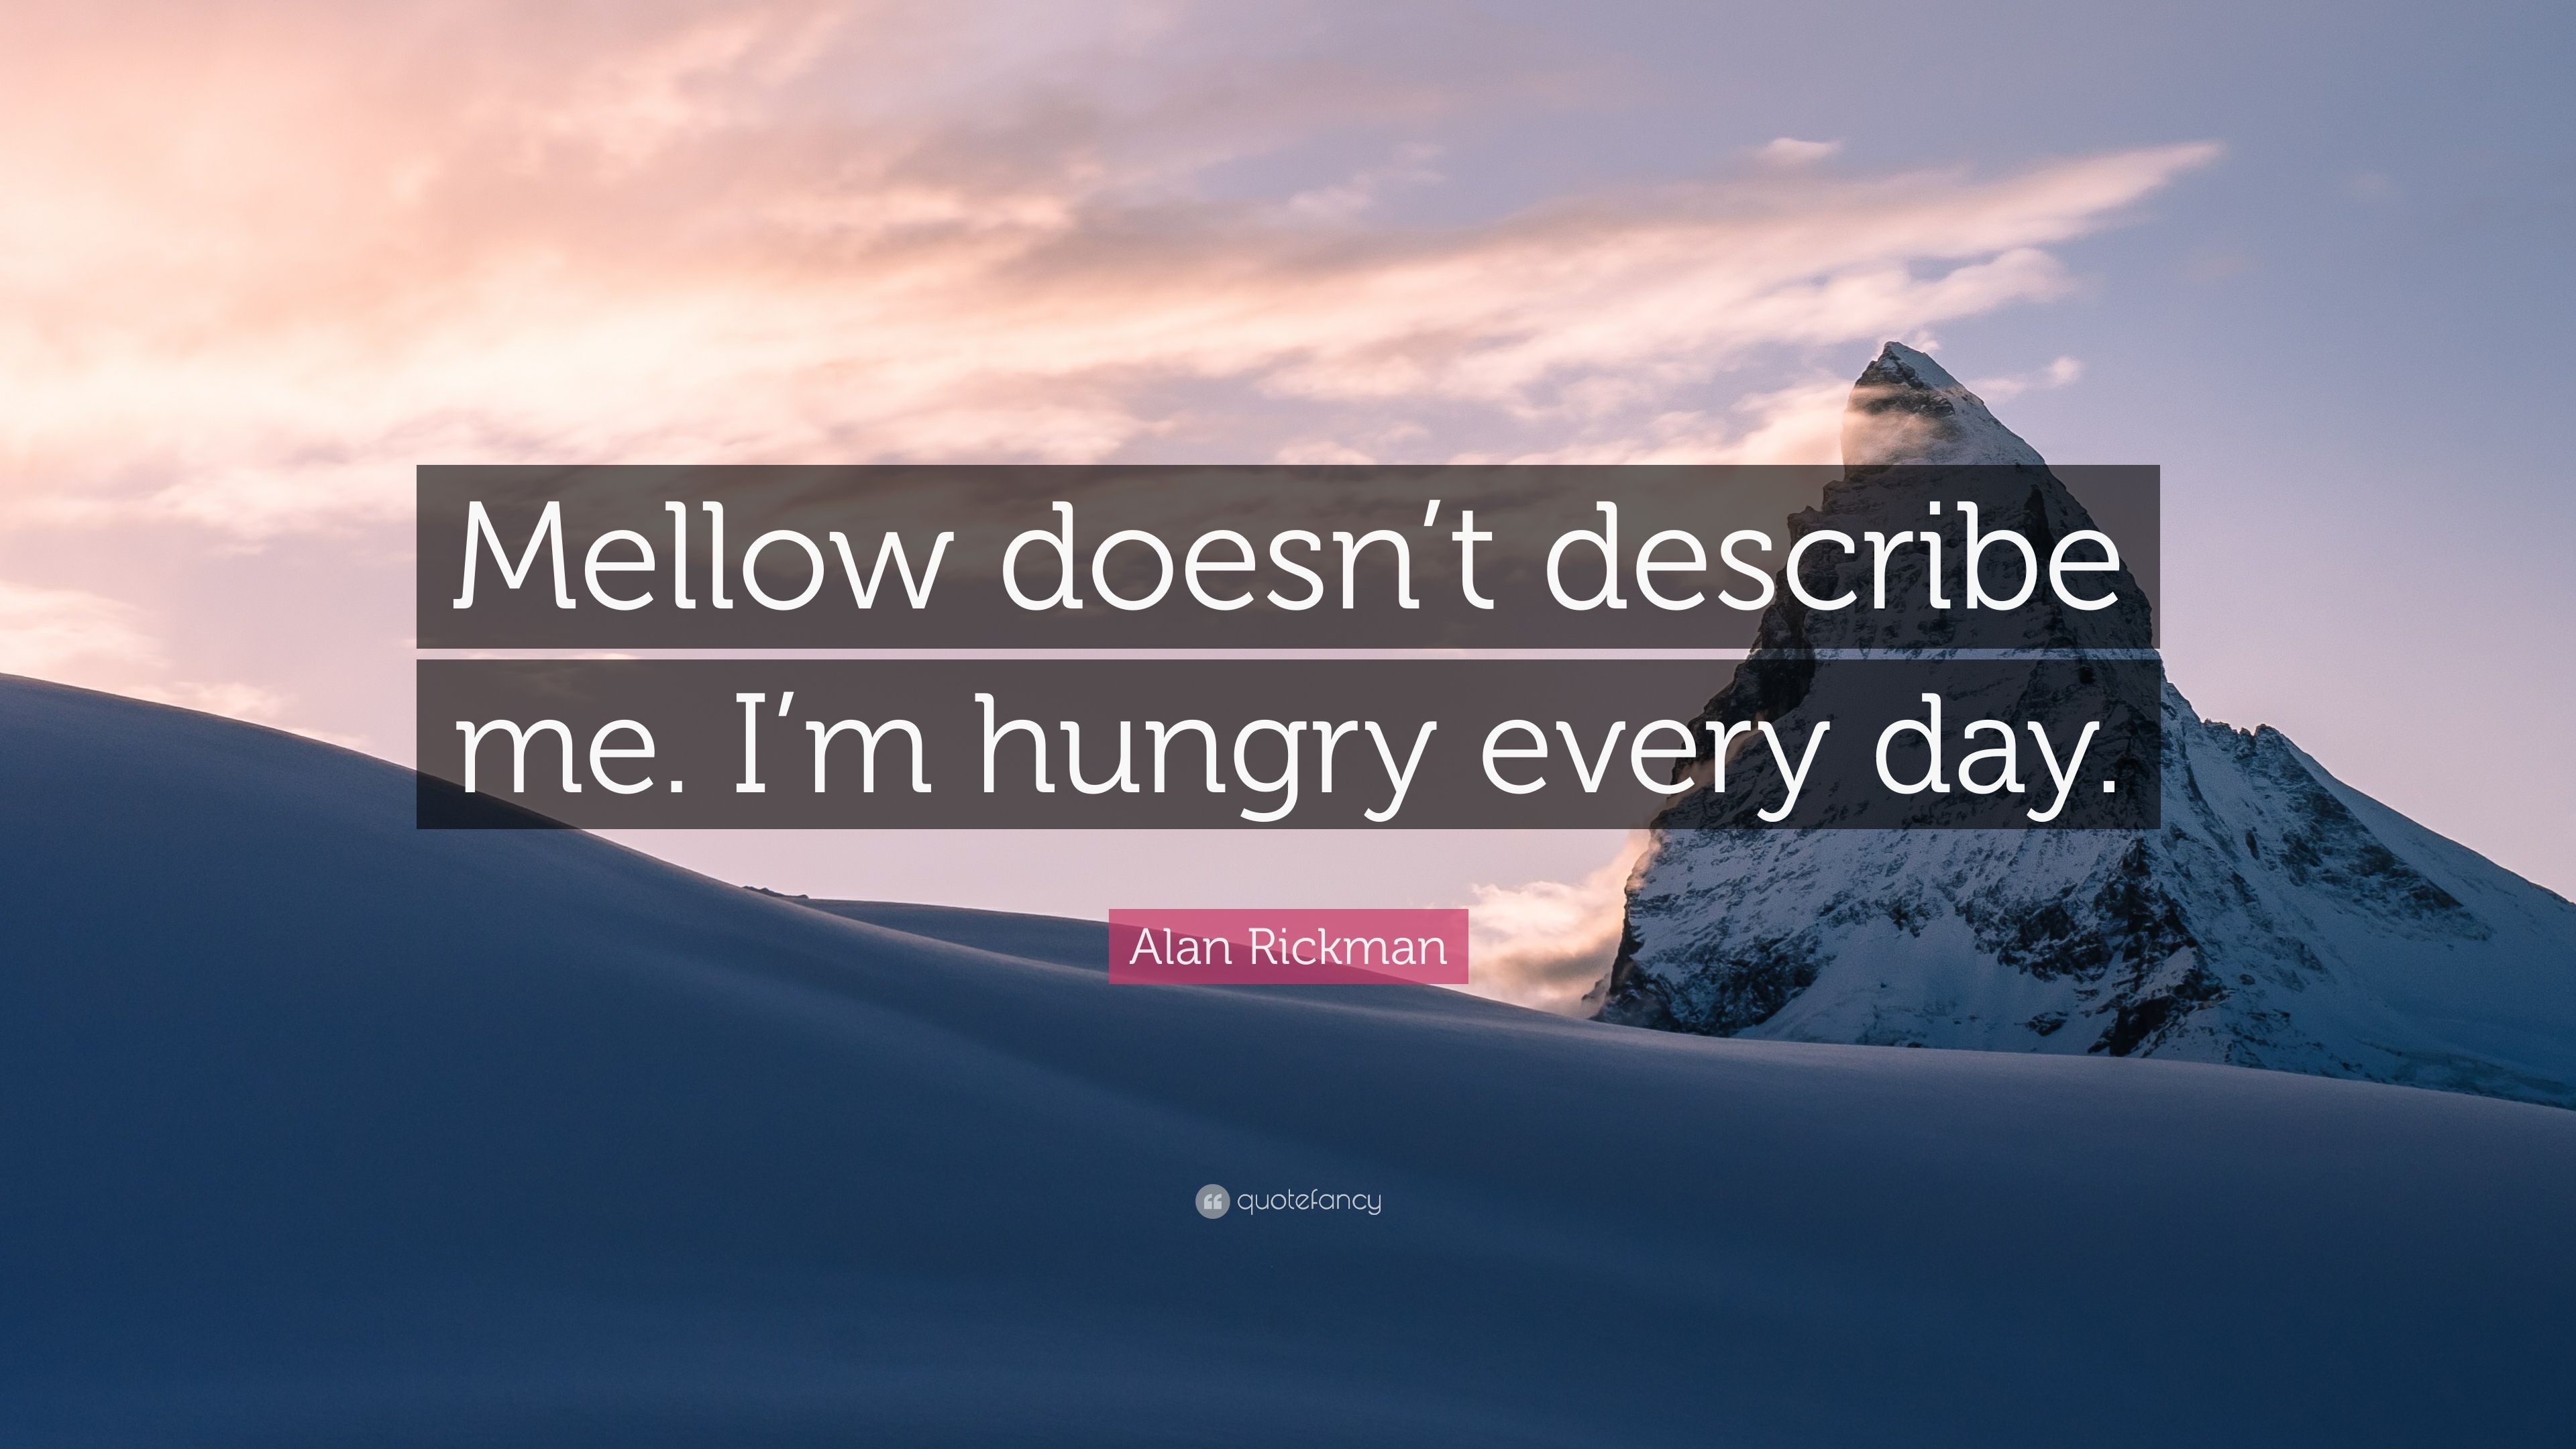 Alan Rickman Quote: "Mellow doesn't describe me. 